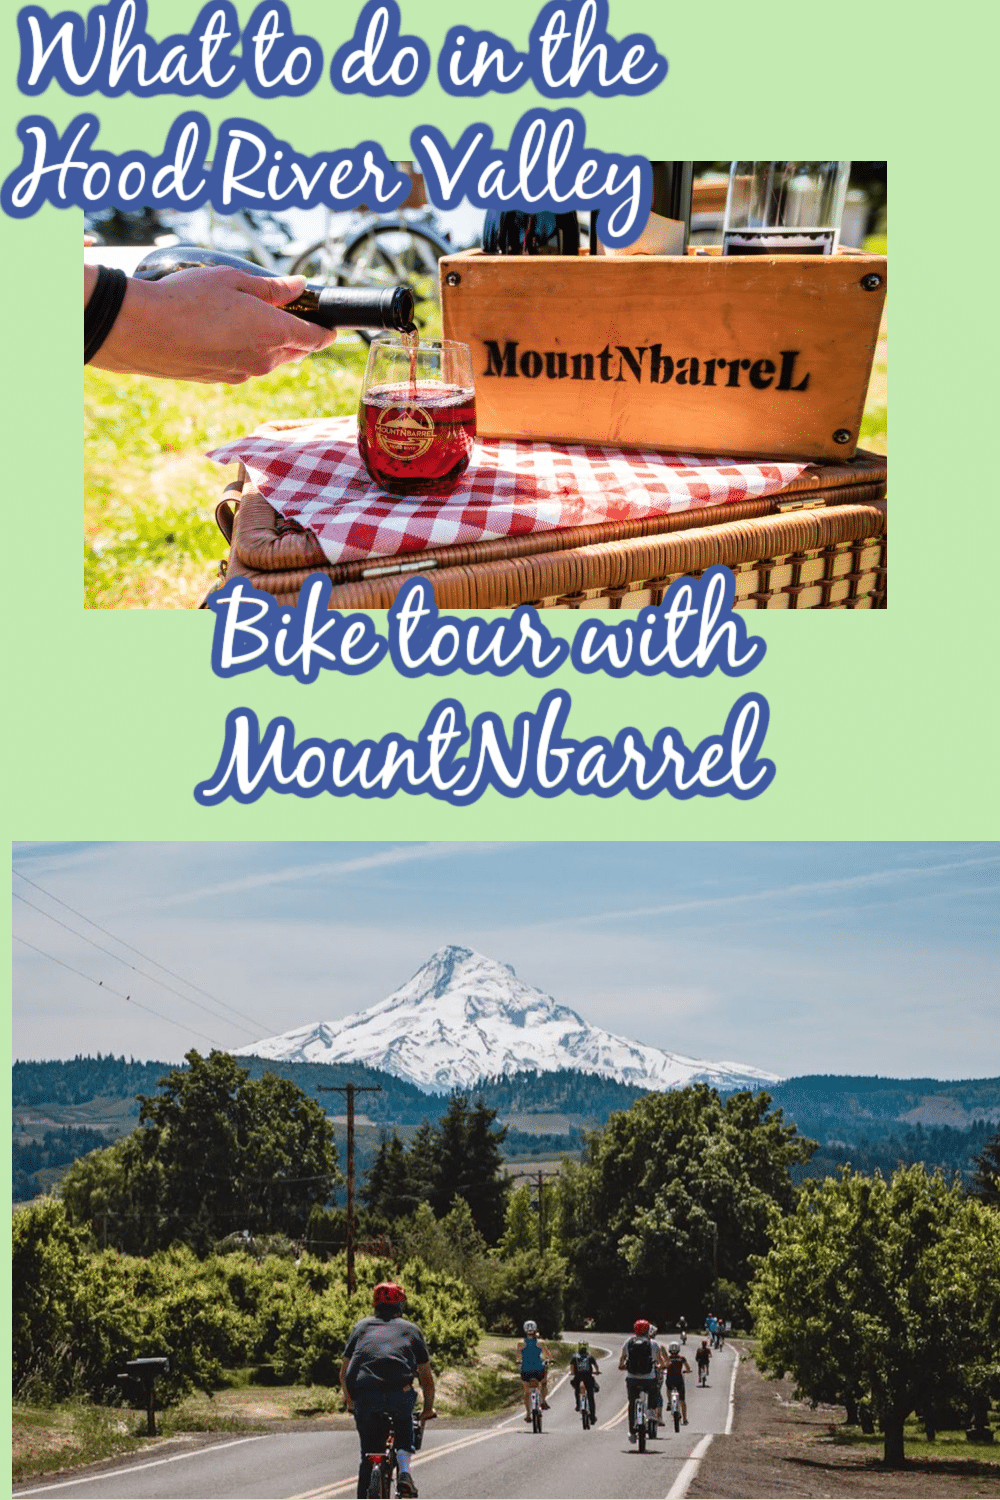 MountNbarrel